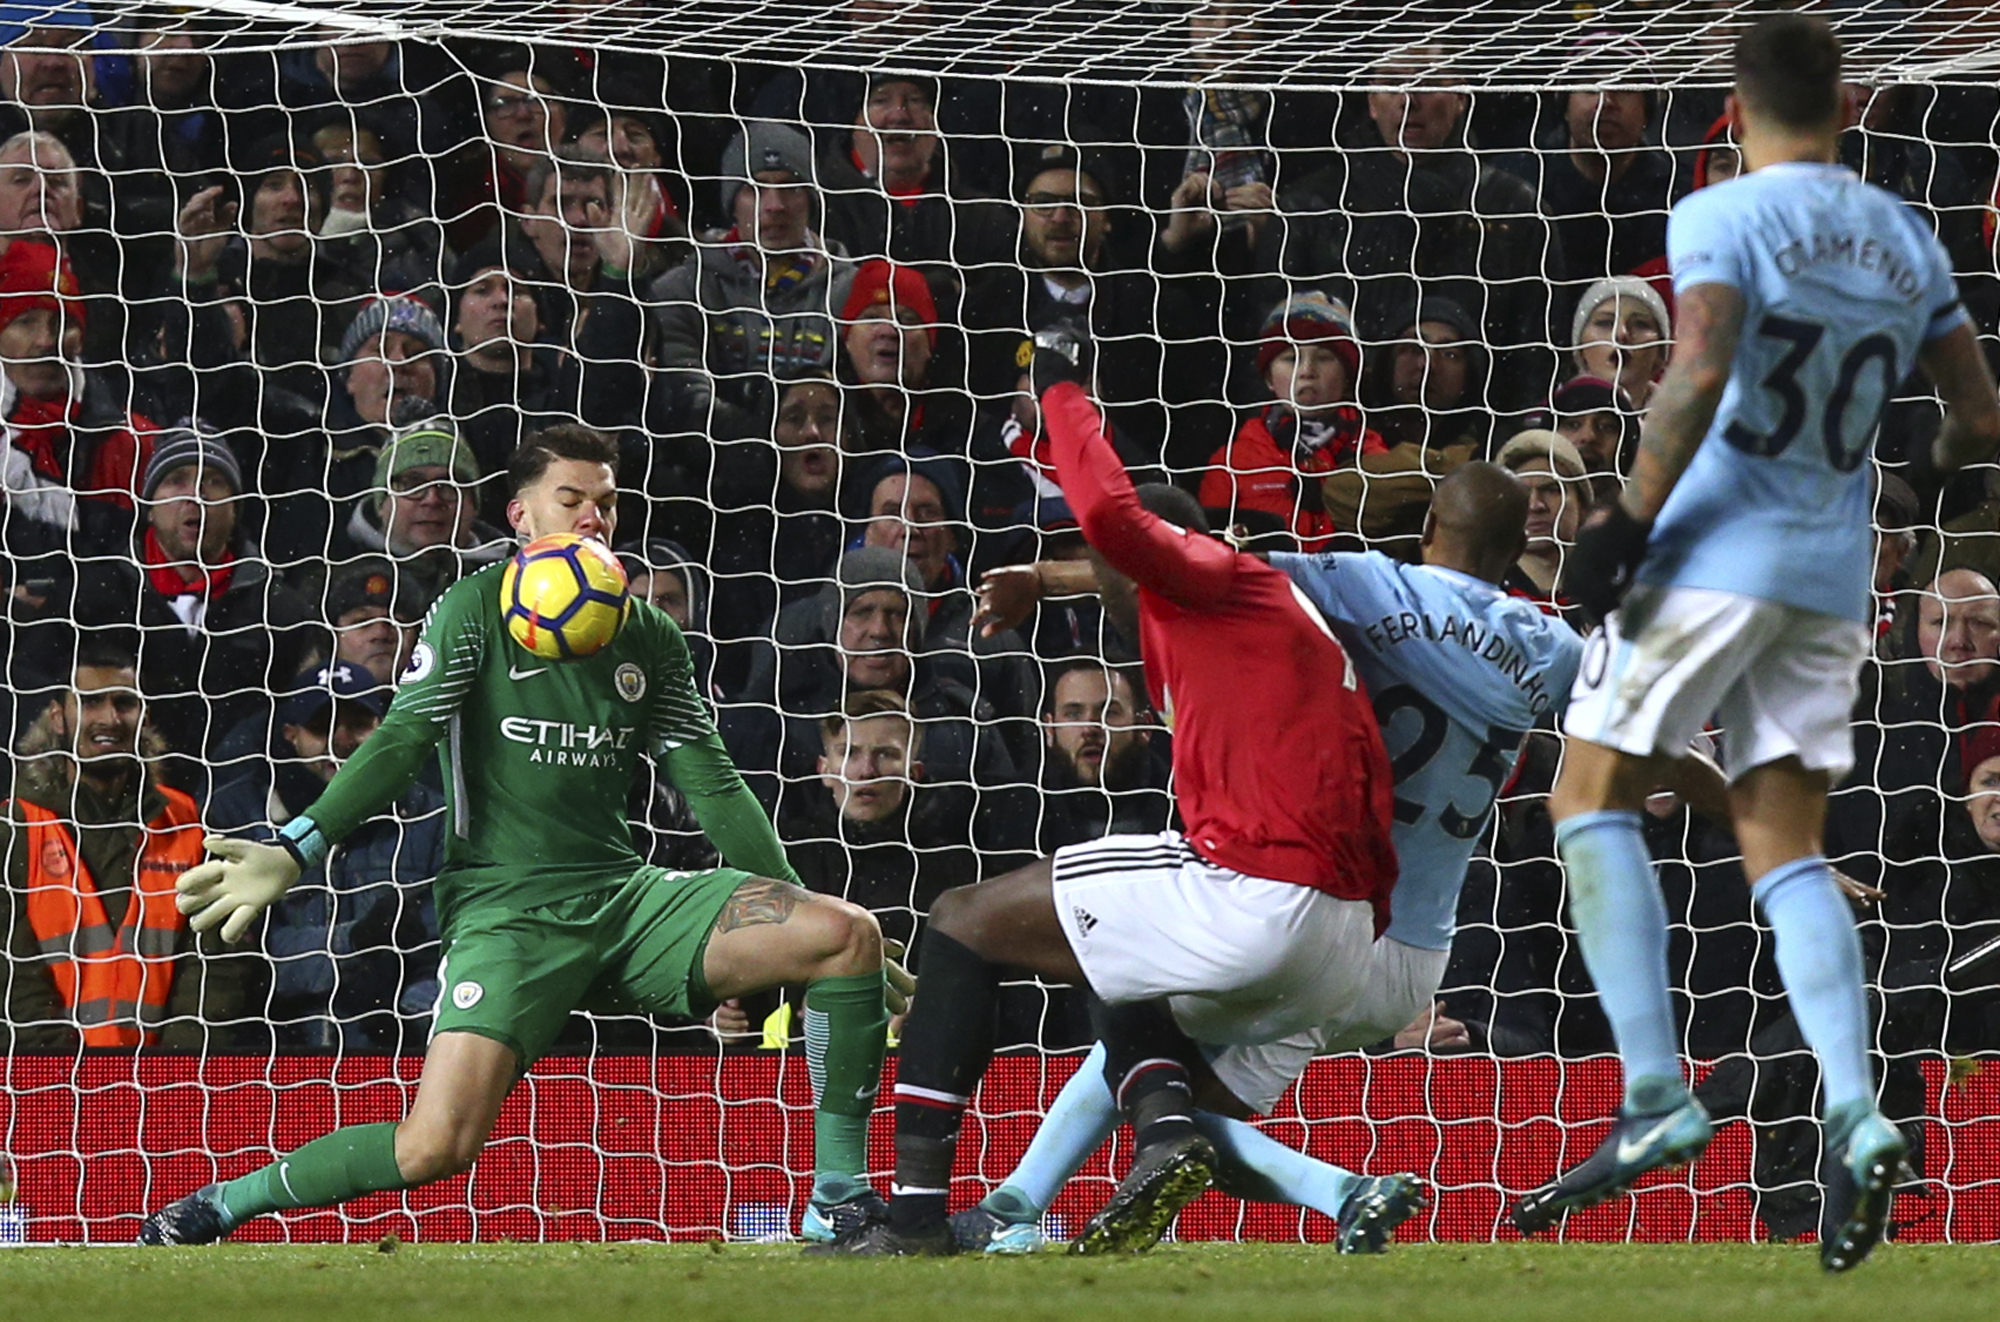 Manchester City goalkeeper Ederson, left, stops a shot from Manchester United's Romelu Lukaku